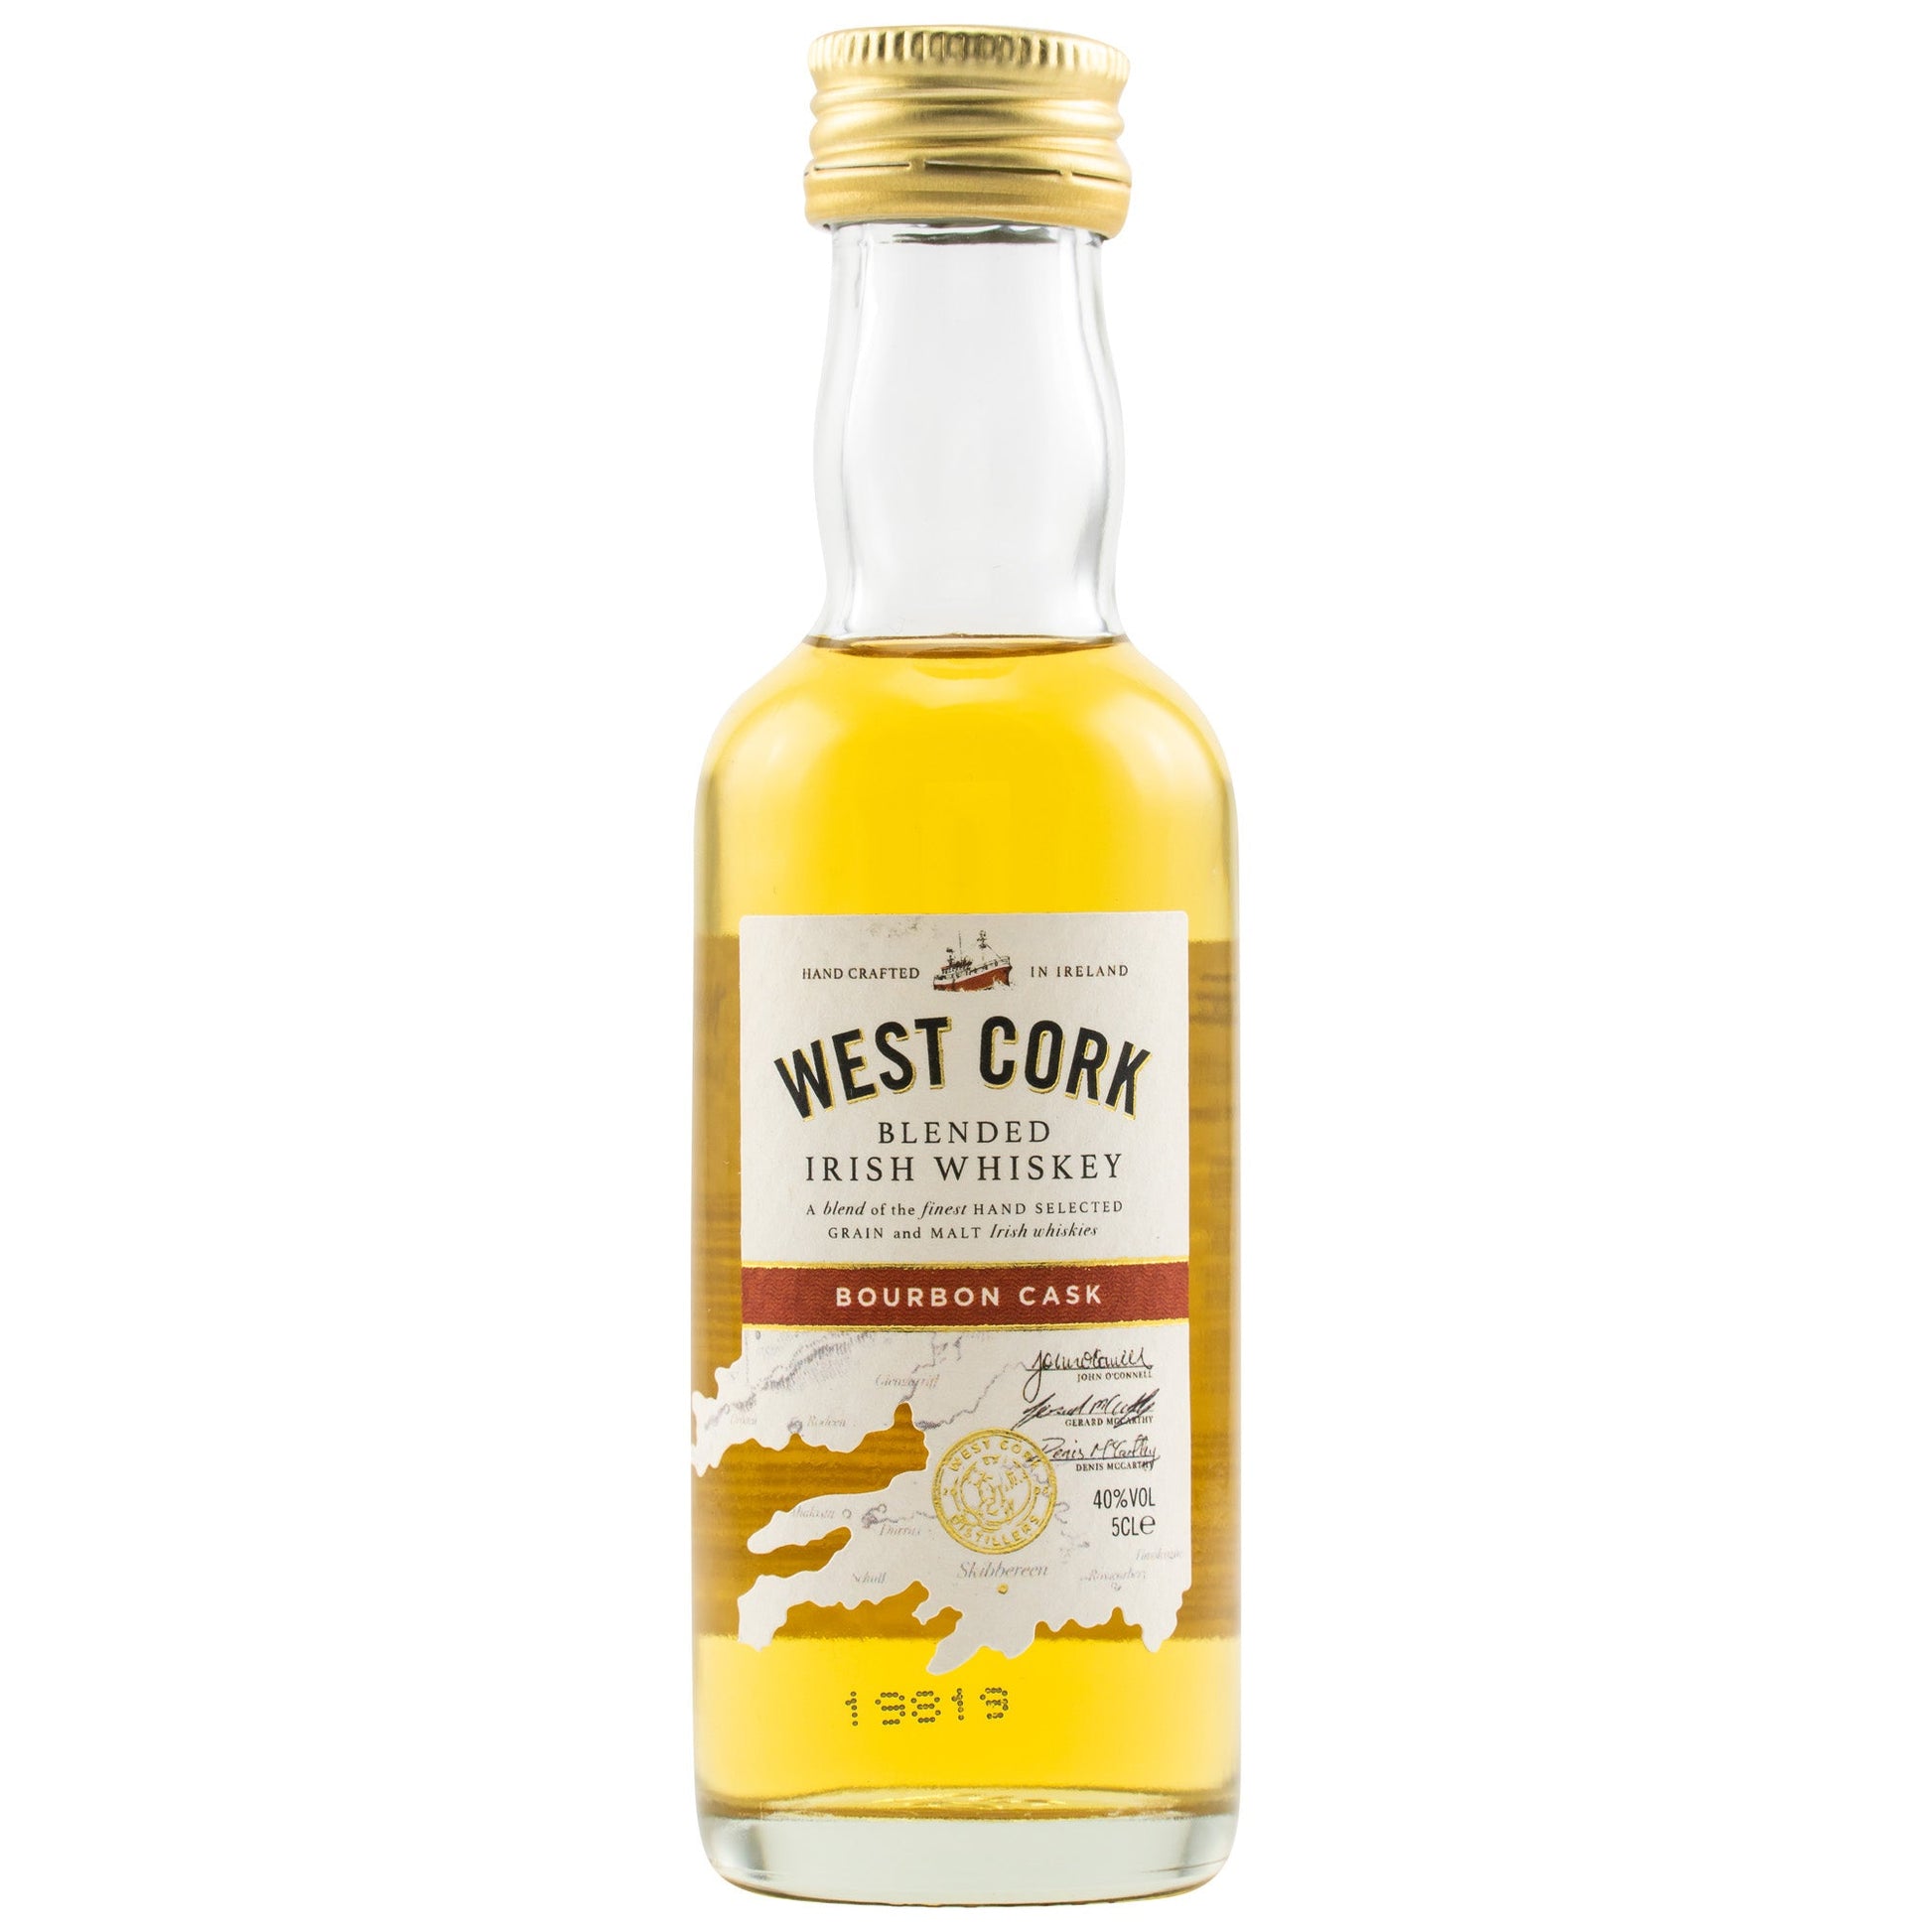 West Cork | Original Blend Bourbon Cask Miniatur | Blended Irish Whiskey | 0,05l | 40%GET A BOTTLE